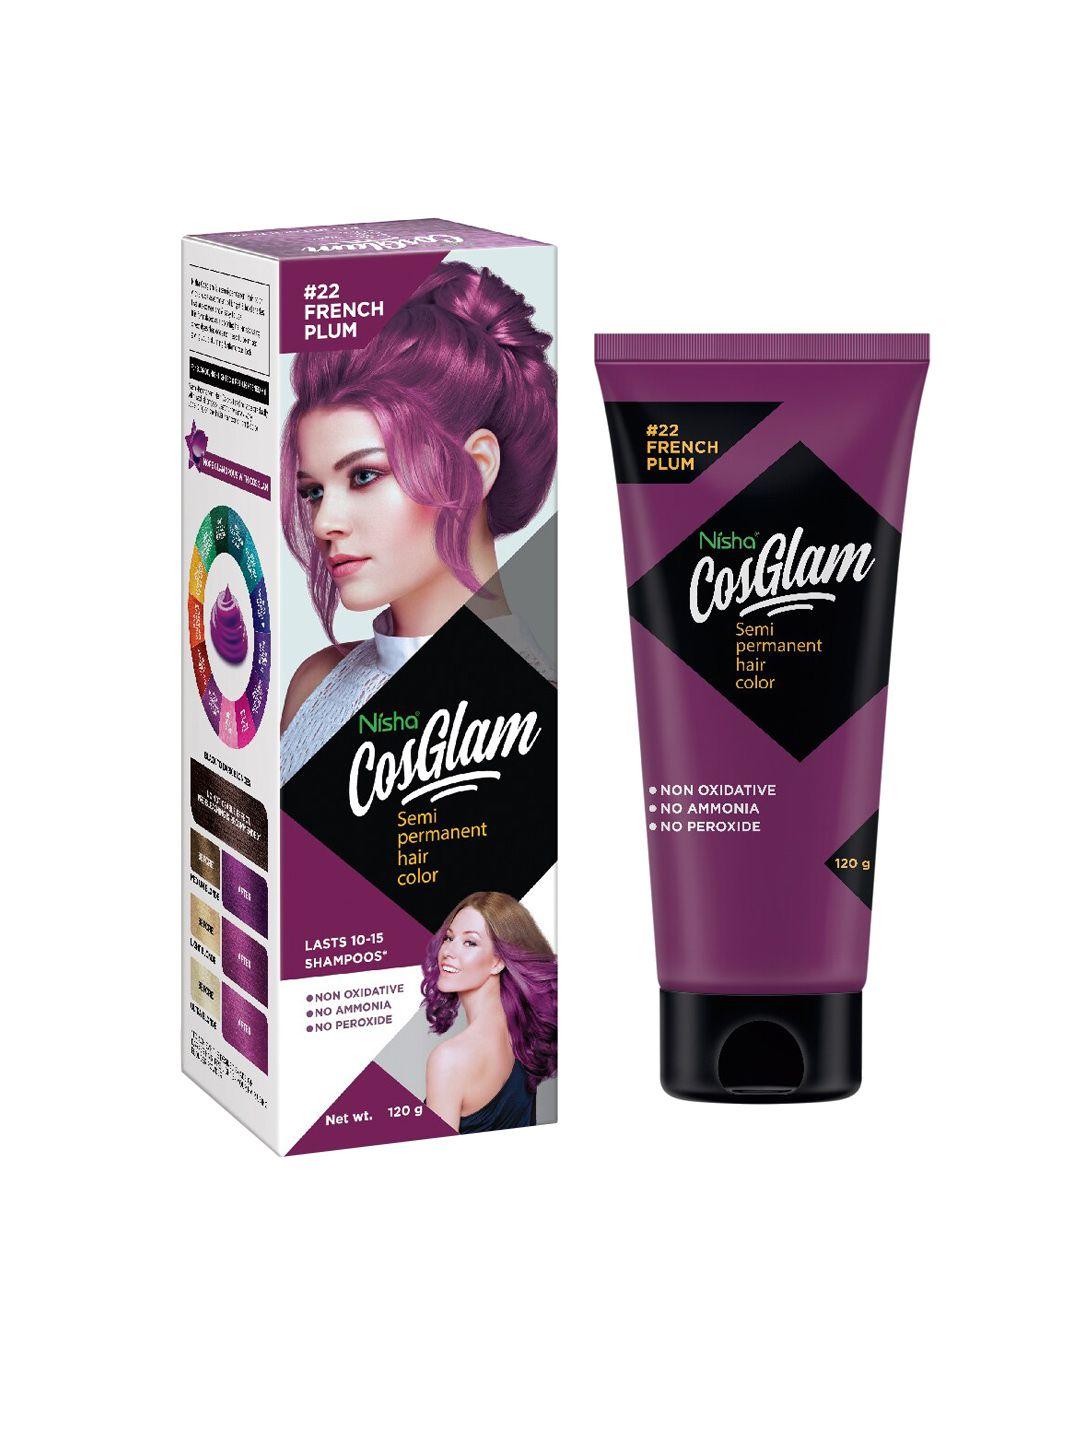 nisha cosglam semi-permanent hair color 120 g - french plum 22